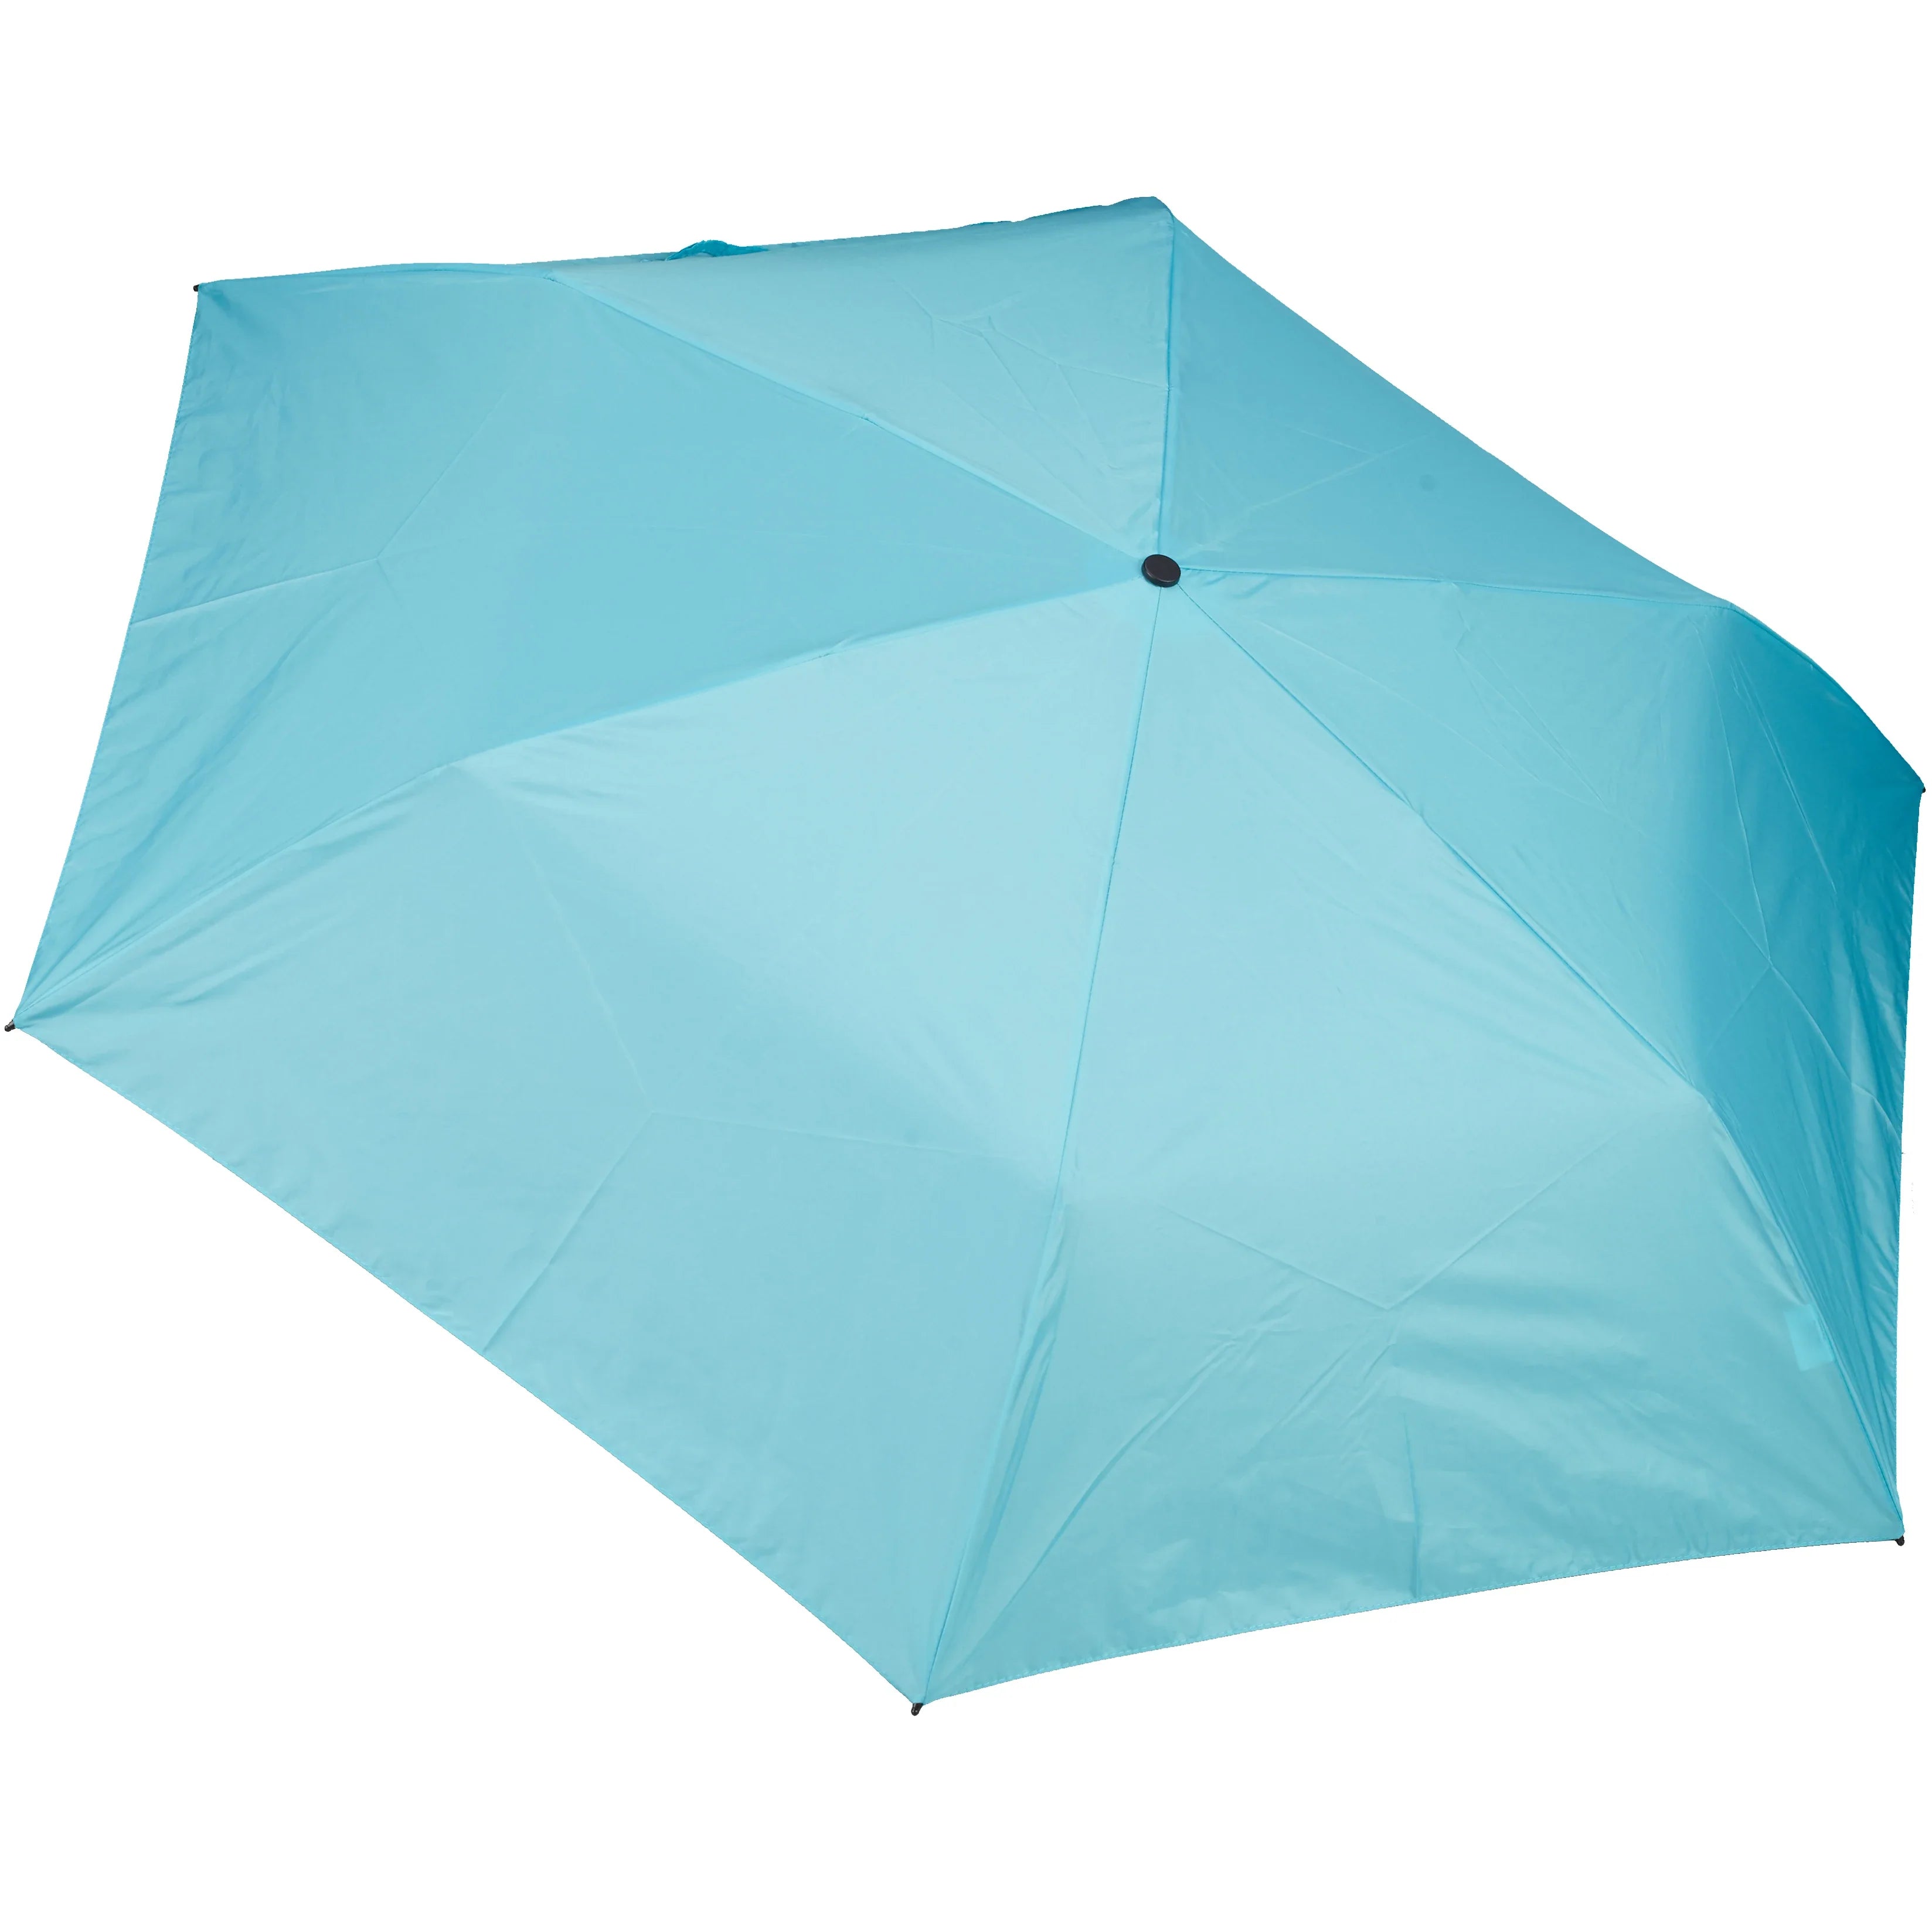 Doppler pocket umbrellas Zero99 pocket umbrella 21 cm - deep blue